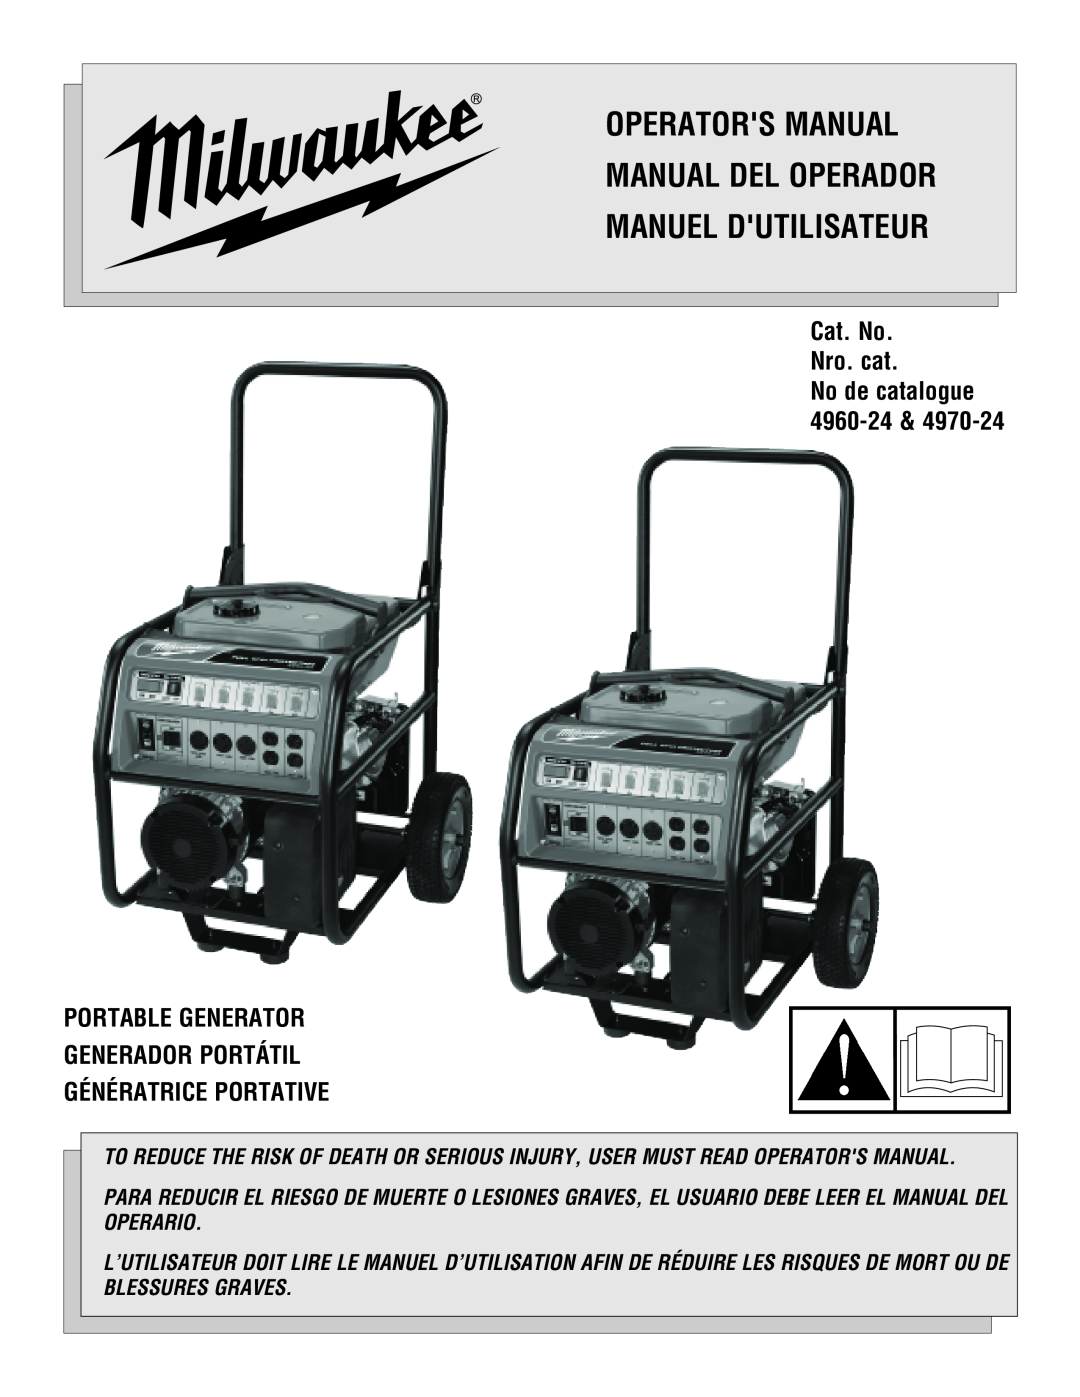 Milwaukee 4960-24, 4970-24 manuel dutilisation Operators Manual Manual Del Operador Manuel Dutilisateur, Cat. No. Nro. cat 